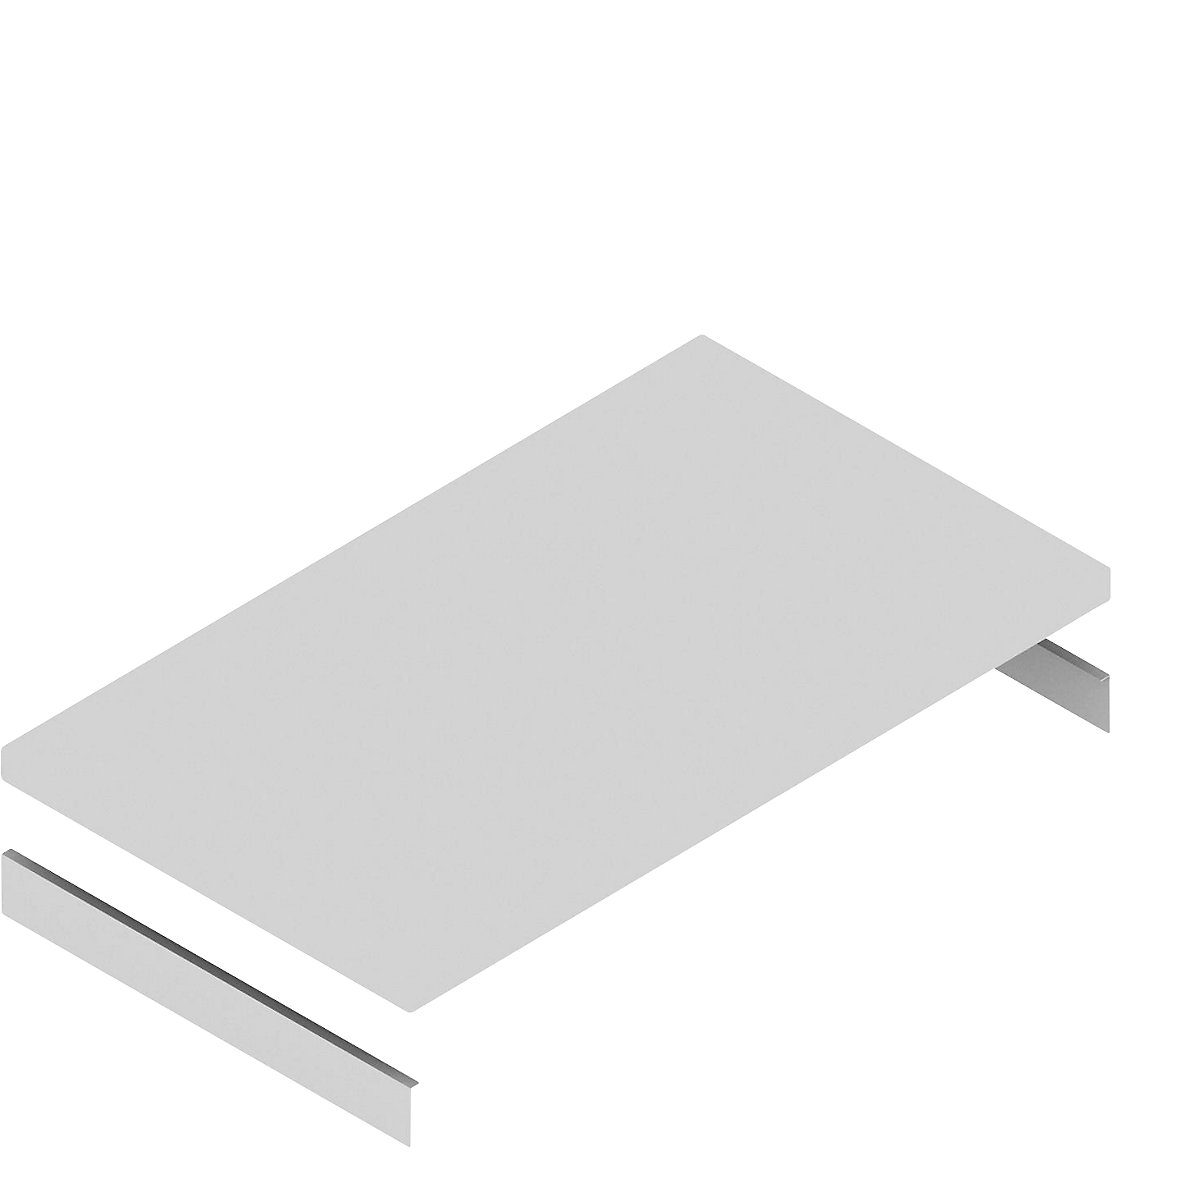 Shelf – hofe, zinc plate, incl. beams, WxD 1025 x 600 mm